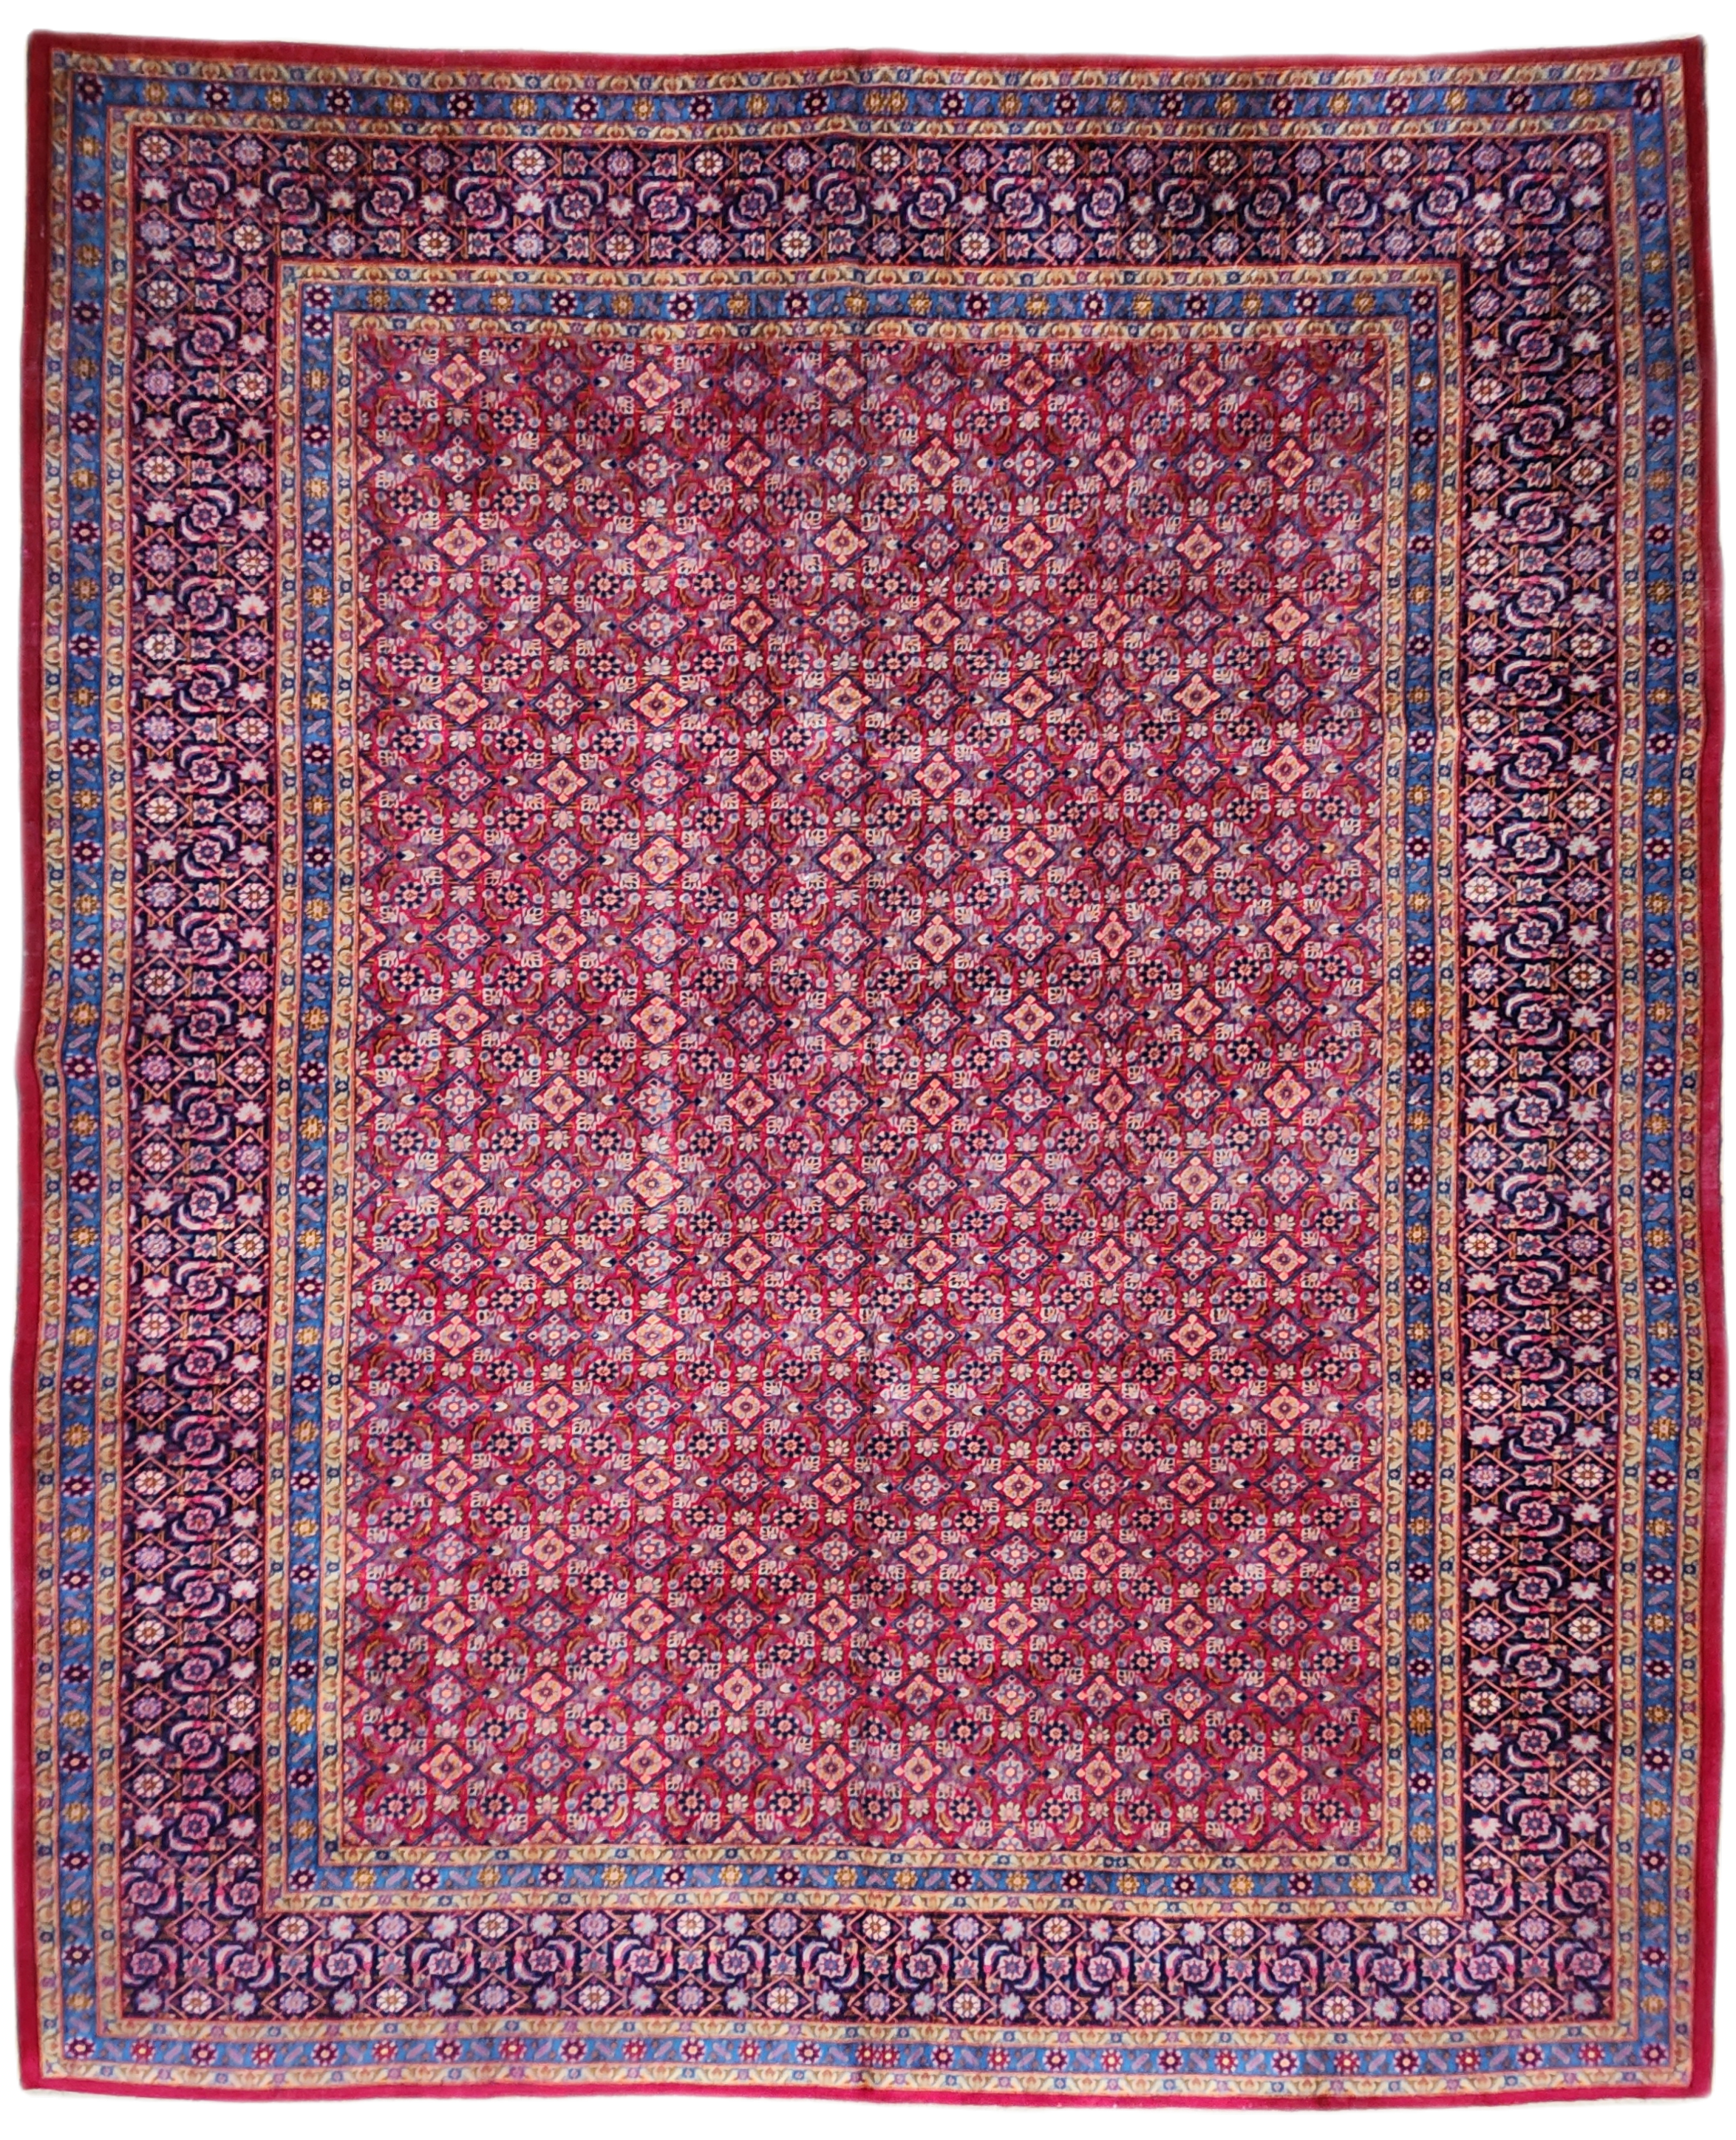 Red and Blue Persian Area Rug, 10 x 13 ft Vintage Turkish Tribal Organic Wool Rug, Recycled Oriental Design Rustic Floor Rug